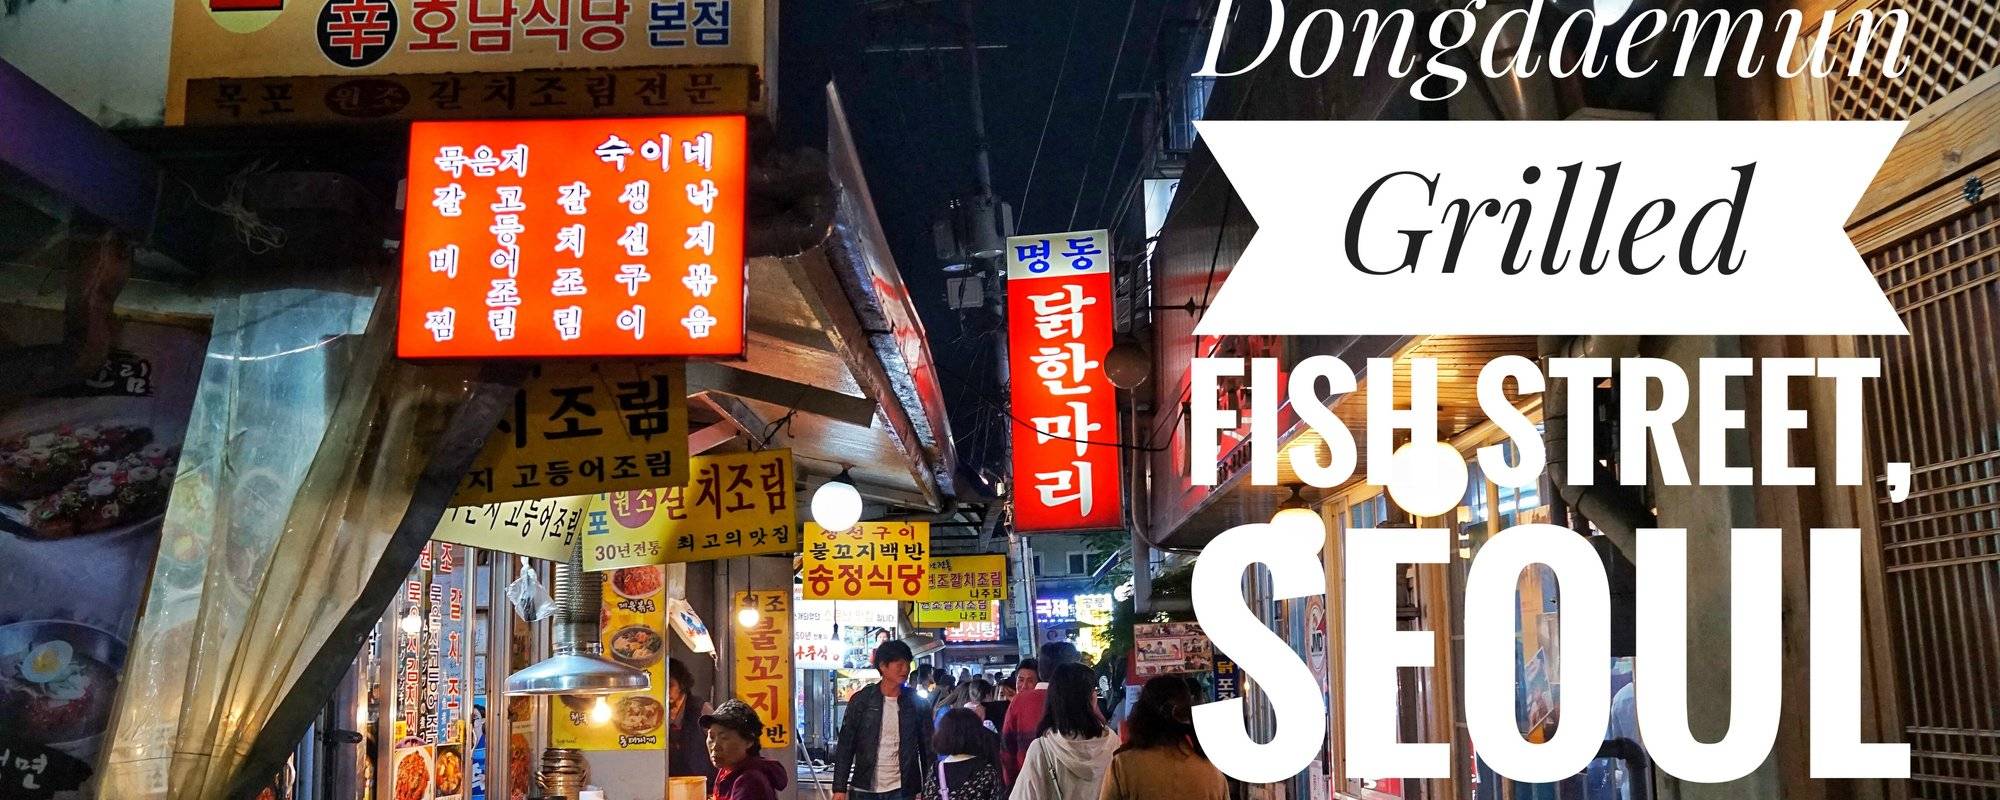 Food Blog: Amazing Korean Grilled Fish at 'Dongdaemun Grilled Fish Street', Seoul